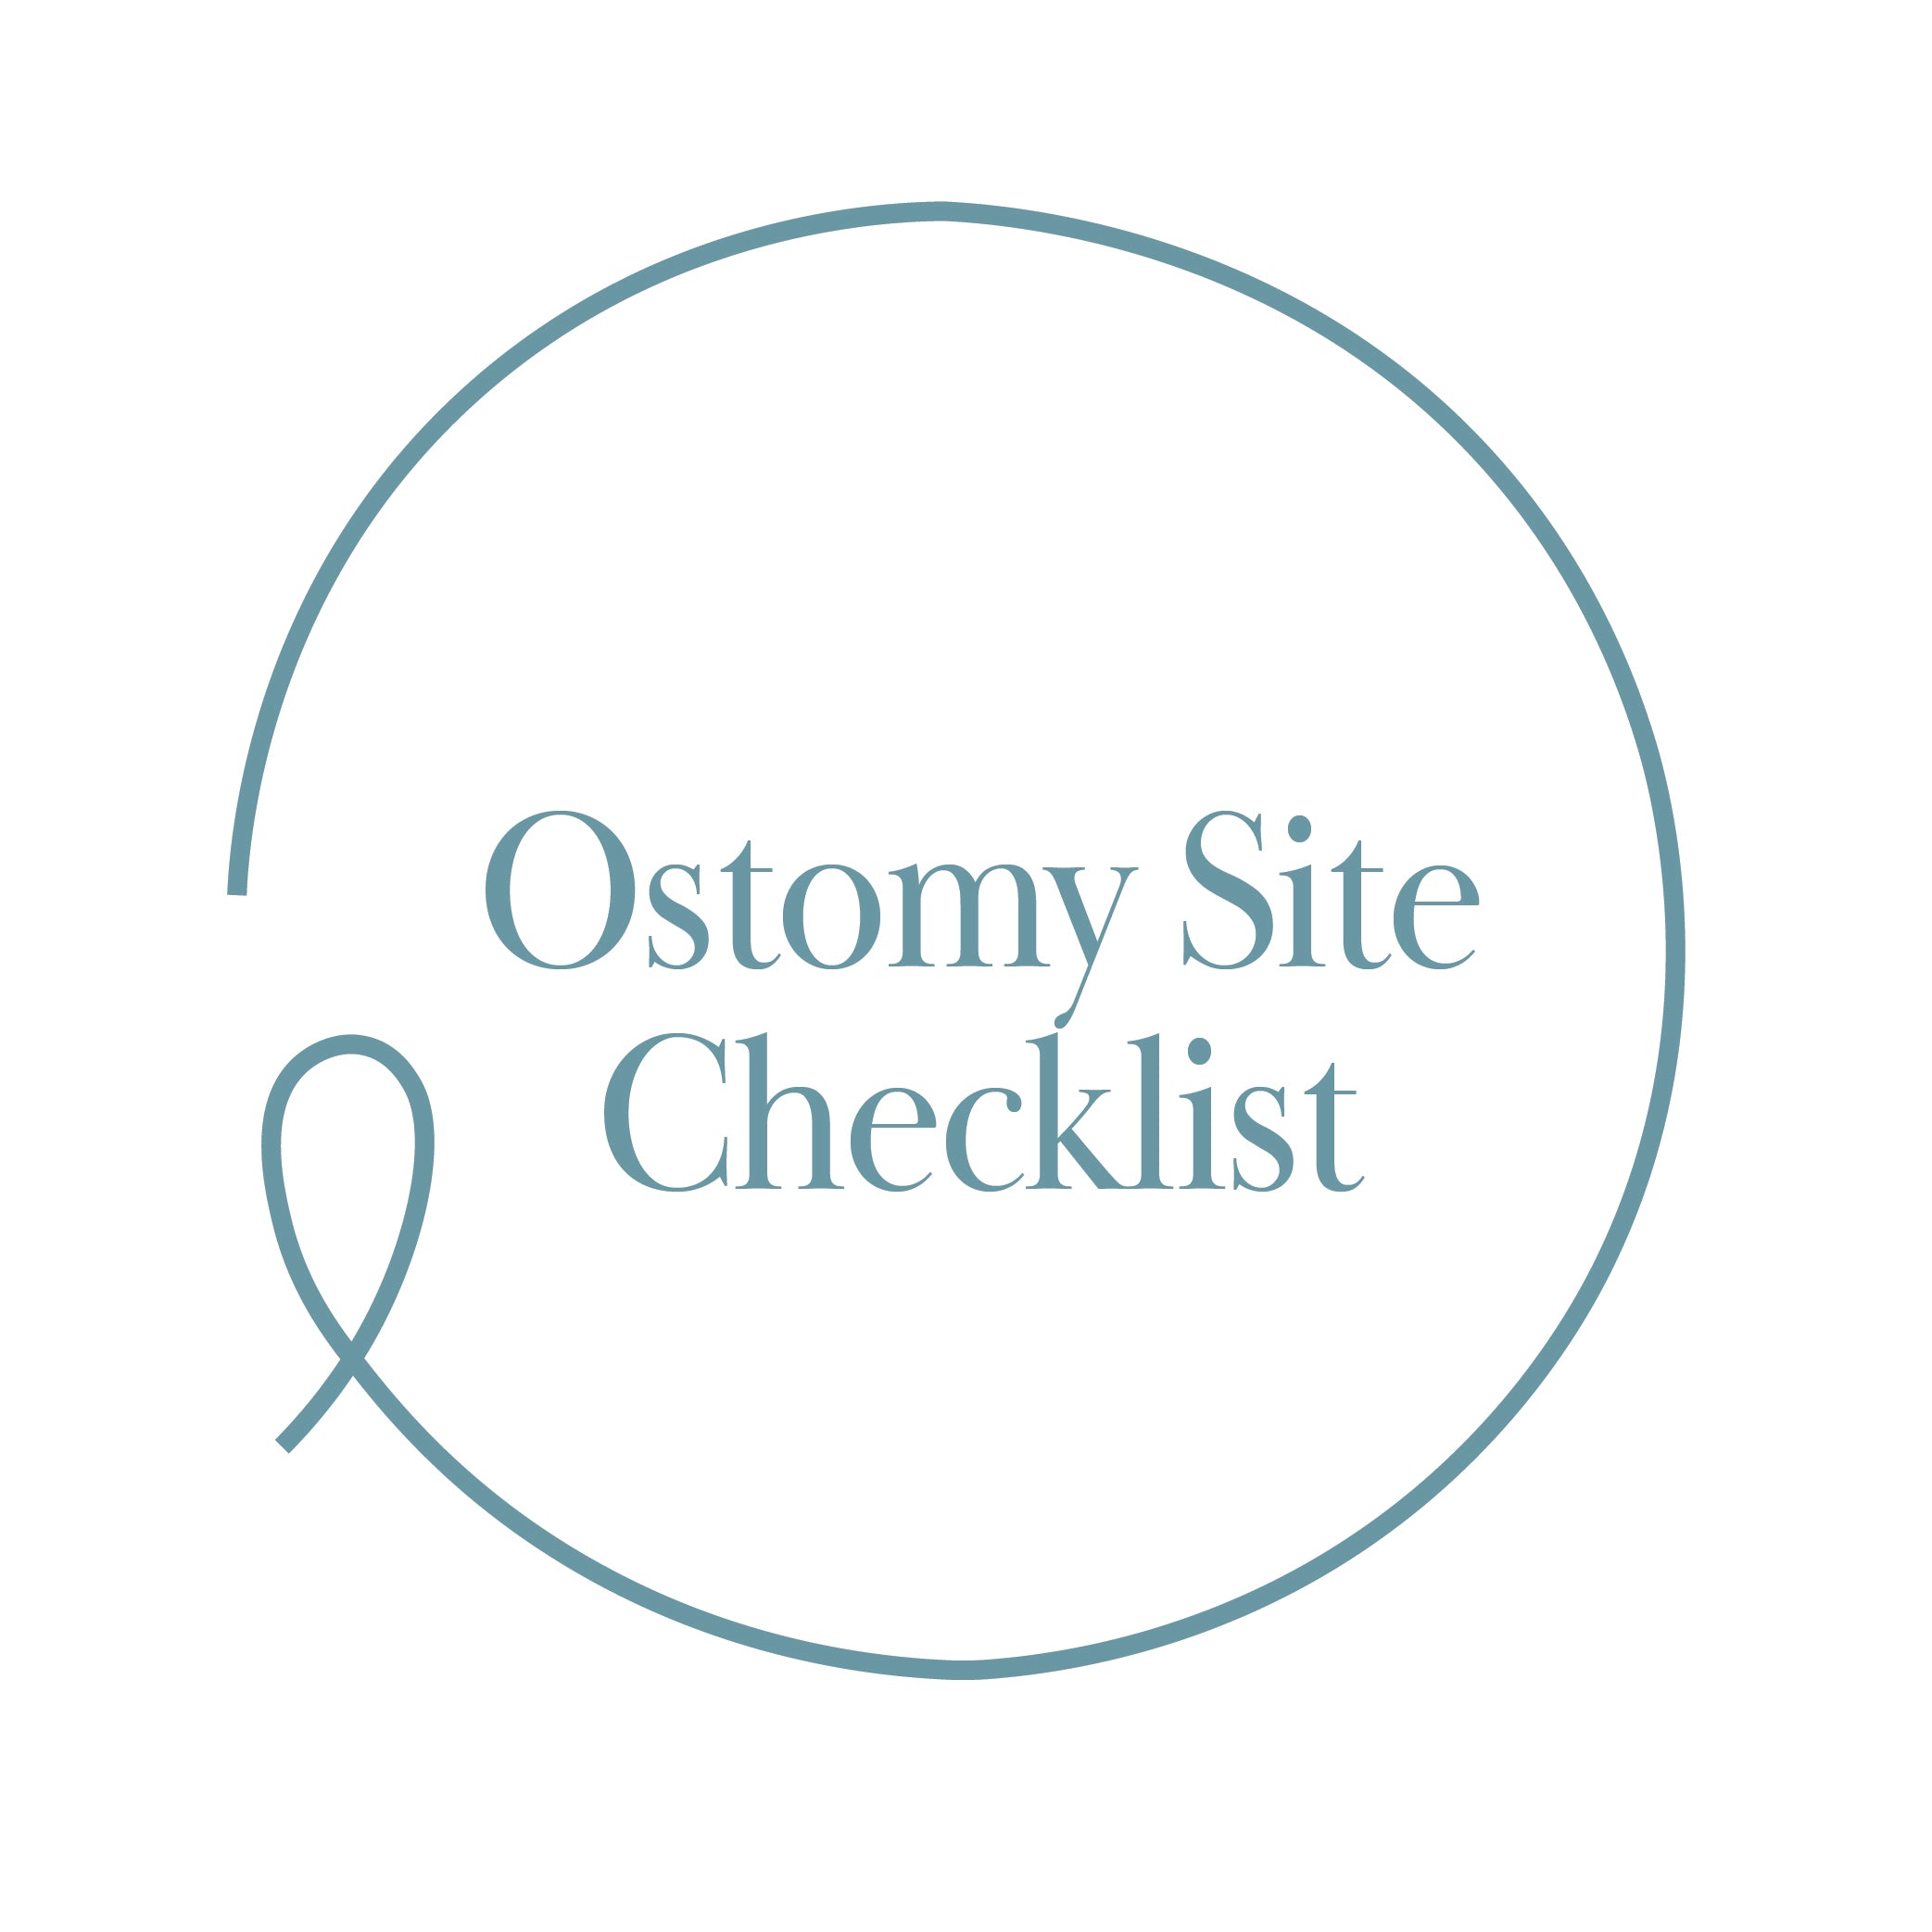 Ostomy Site Checklist